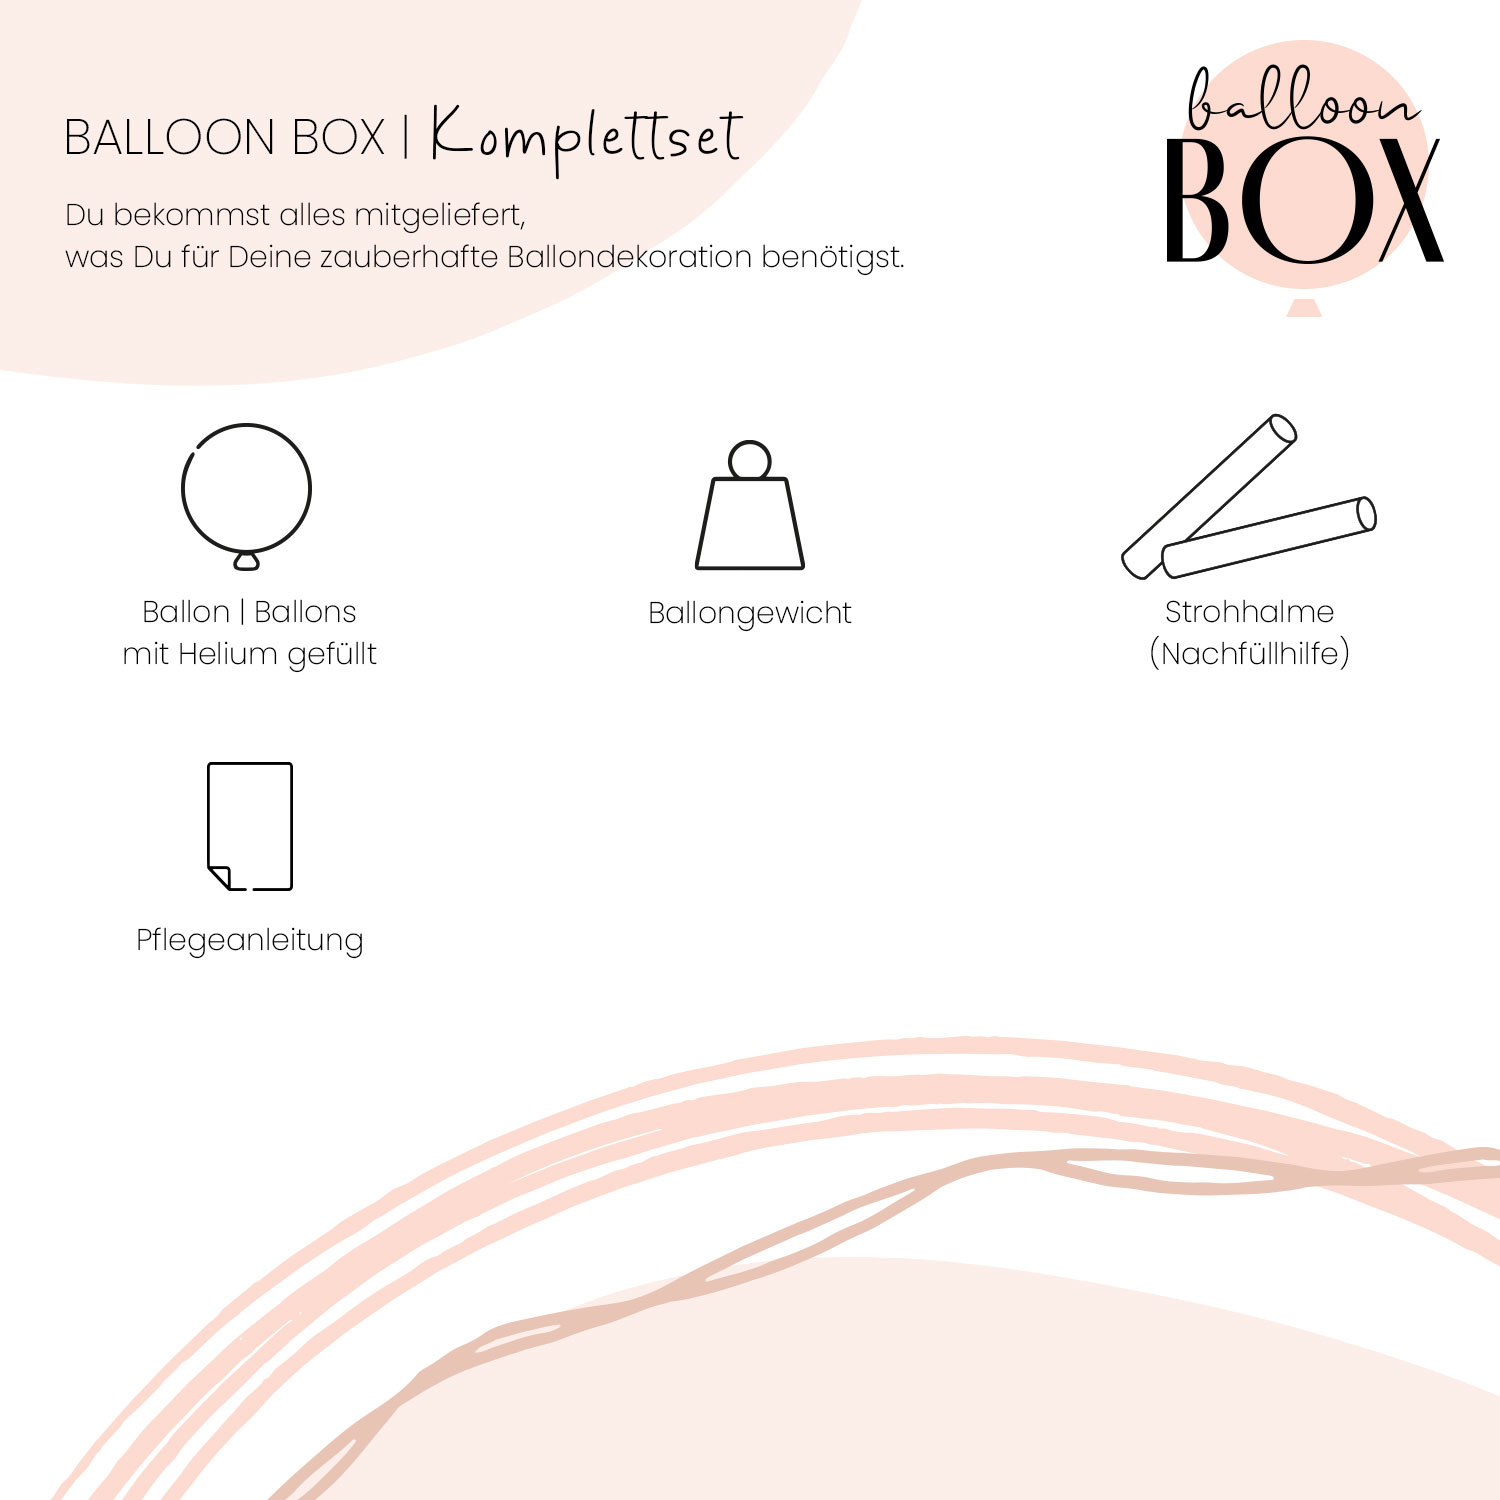 Heliumballon in a Box - Verliebt Verlobt Verheiratet